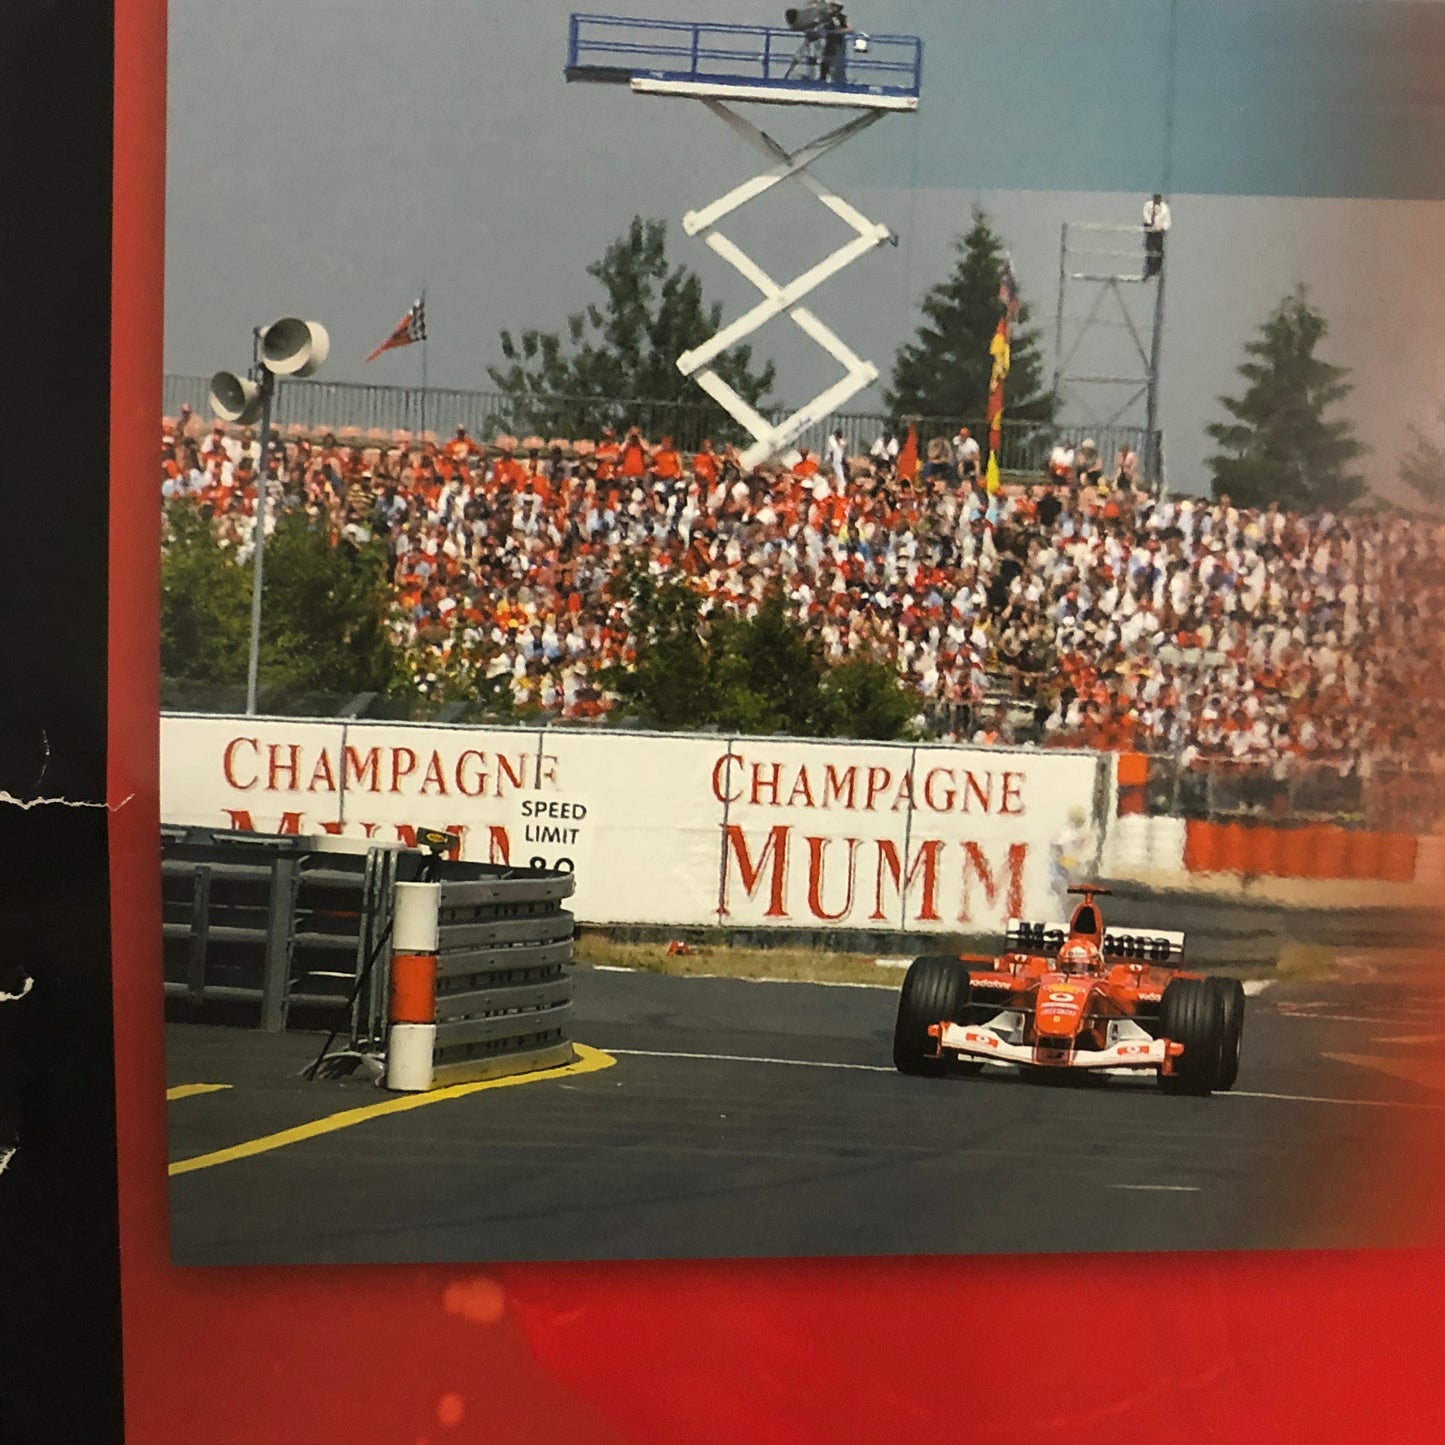 Champagne MUMM, Formula 1 Season Poster Year 2003 with Michael Schumacher Ferrari